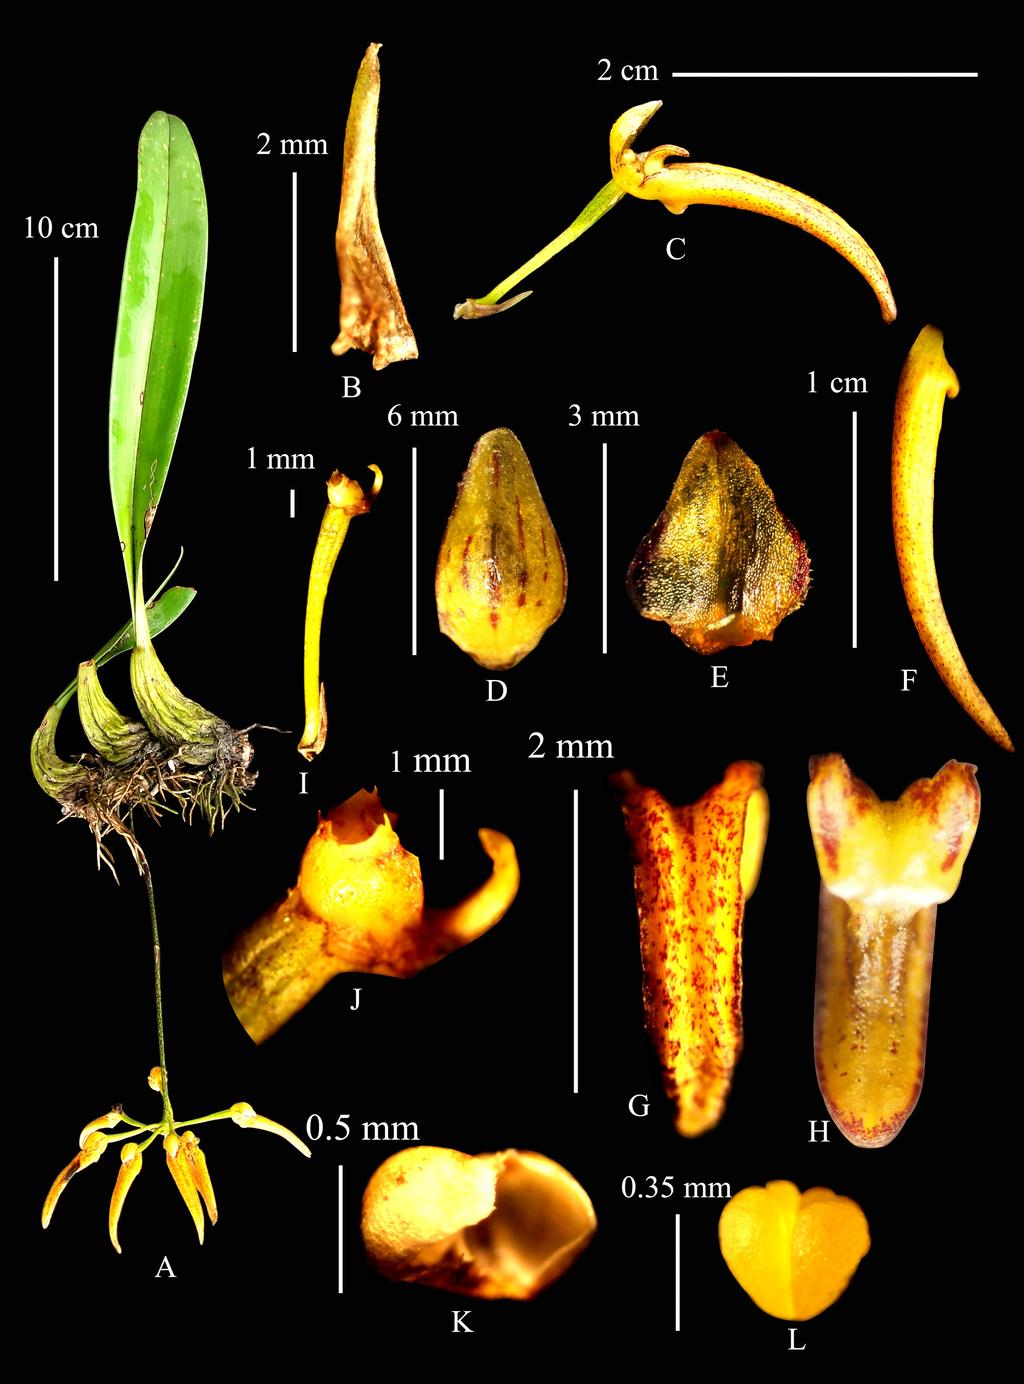 Pl. 2: Bulbophyllum forrestii A. Habit; B. Bract; C. Flower; D. Dorsal sepal; E. Petal; F. Lateral sepal; G.